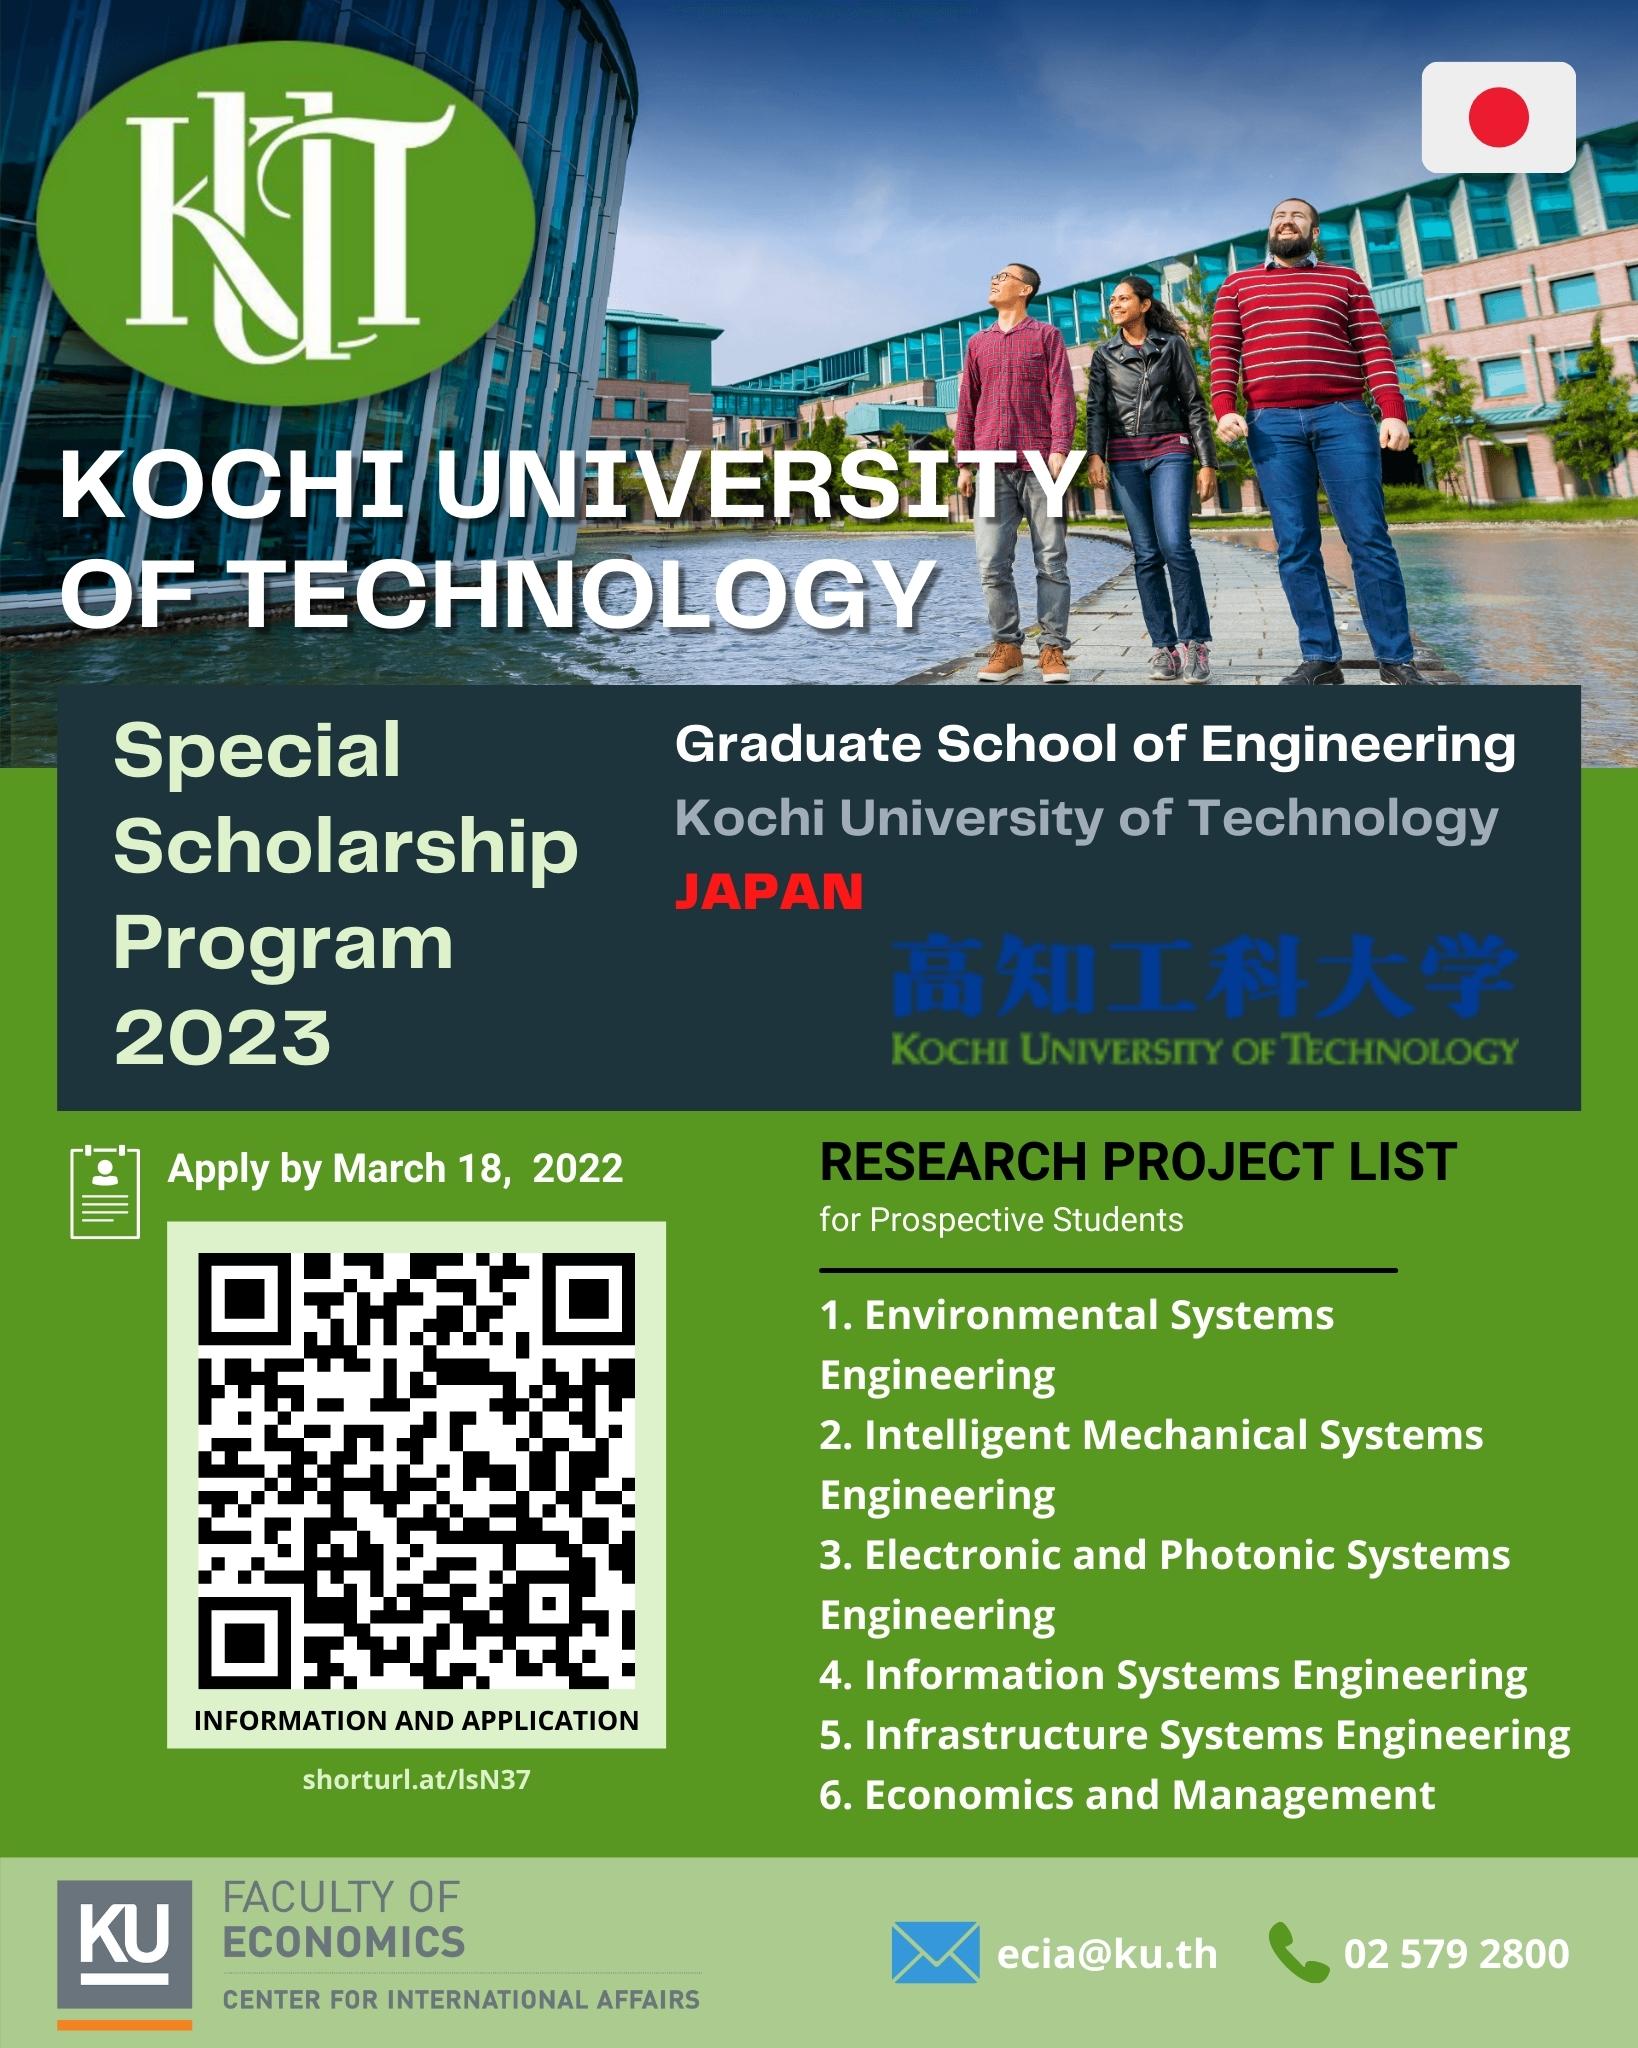 SPECIAL SCHOLARSHIP PROGRAM – Kochi University of Technology (Doctoral Program)